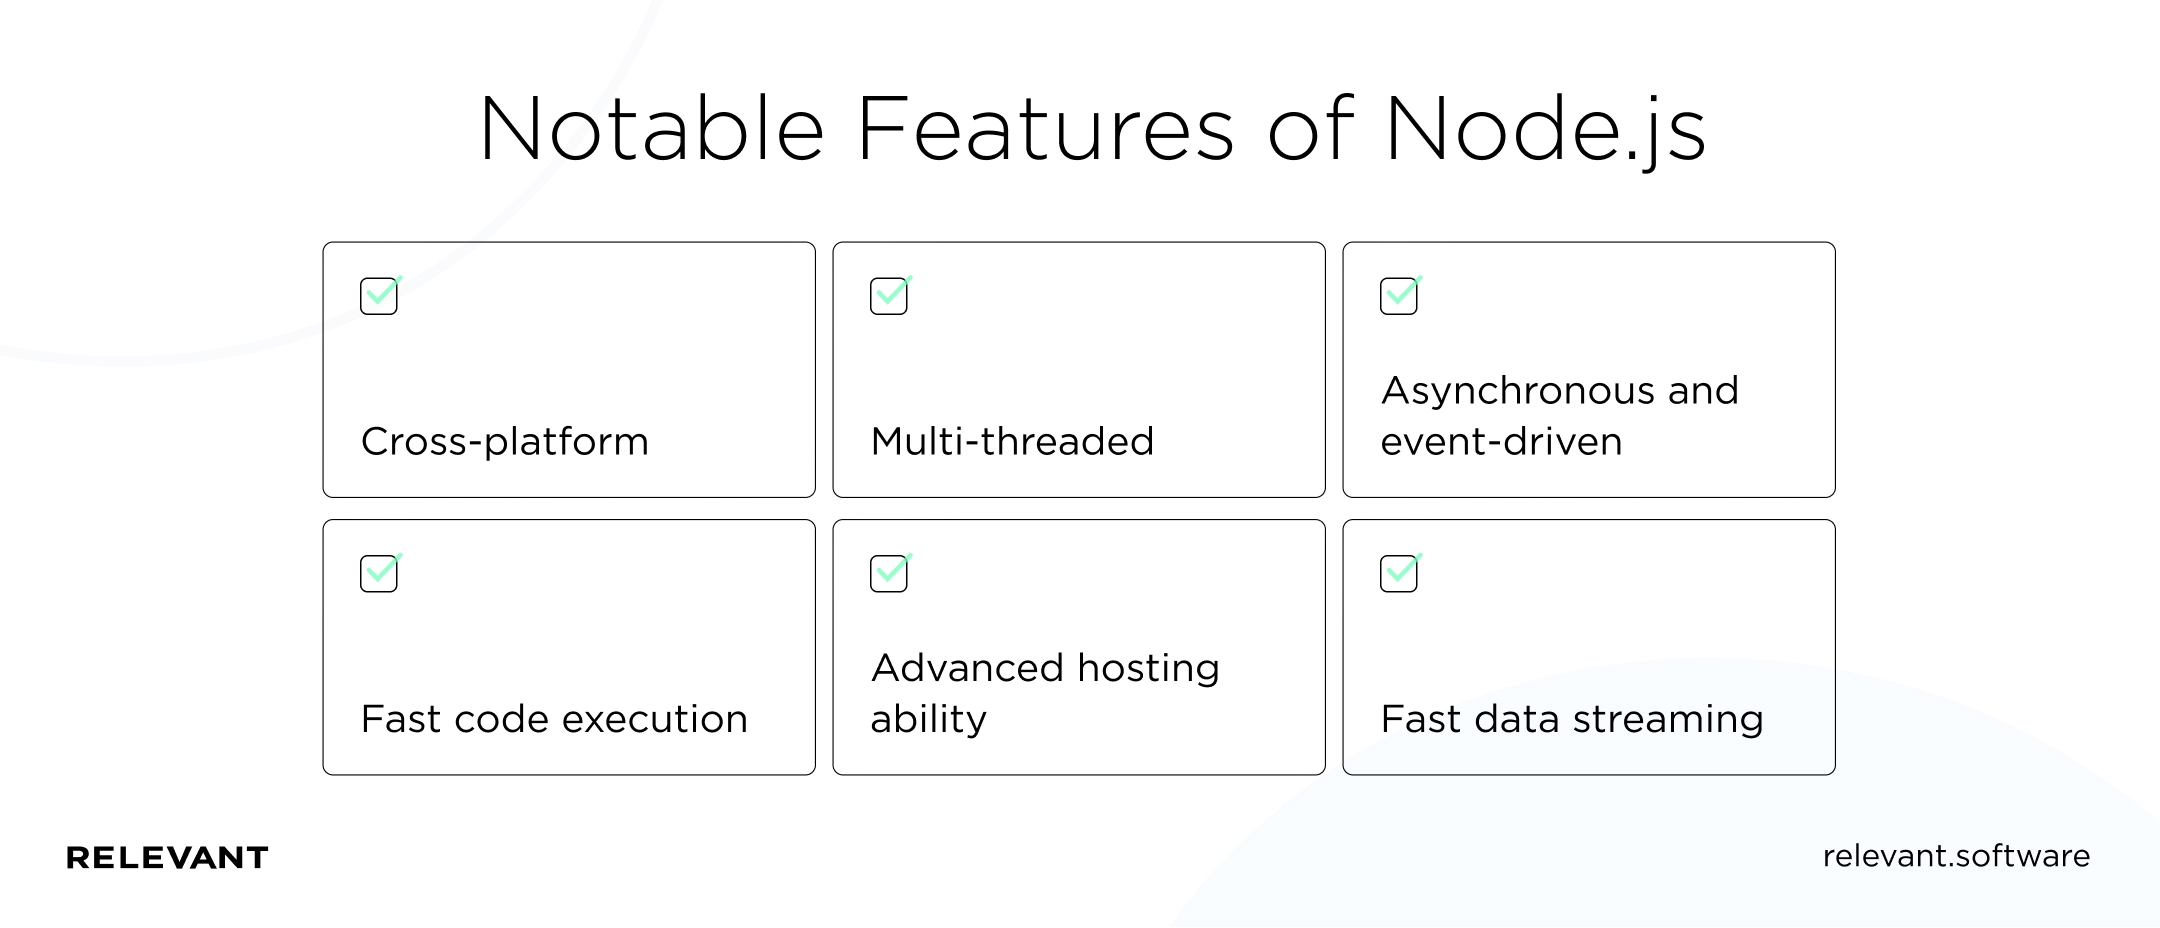 Notable Features of Node.js